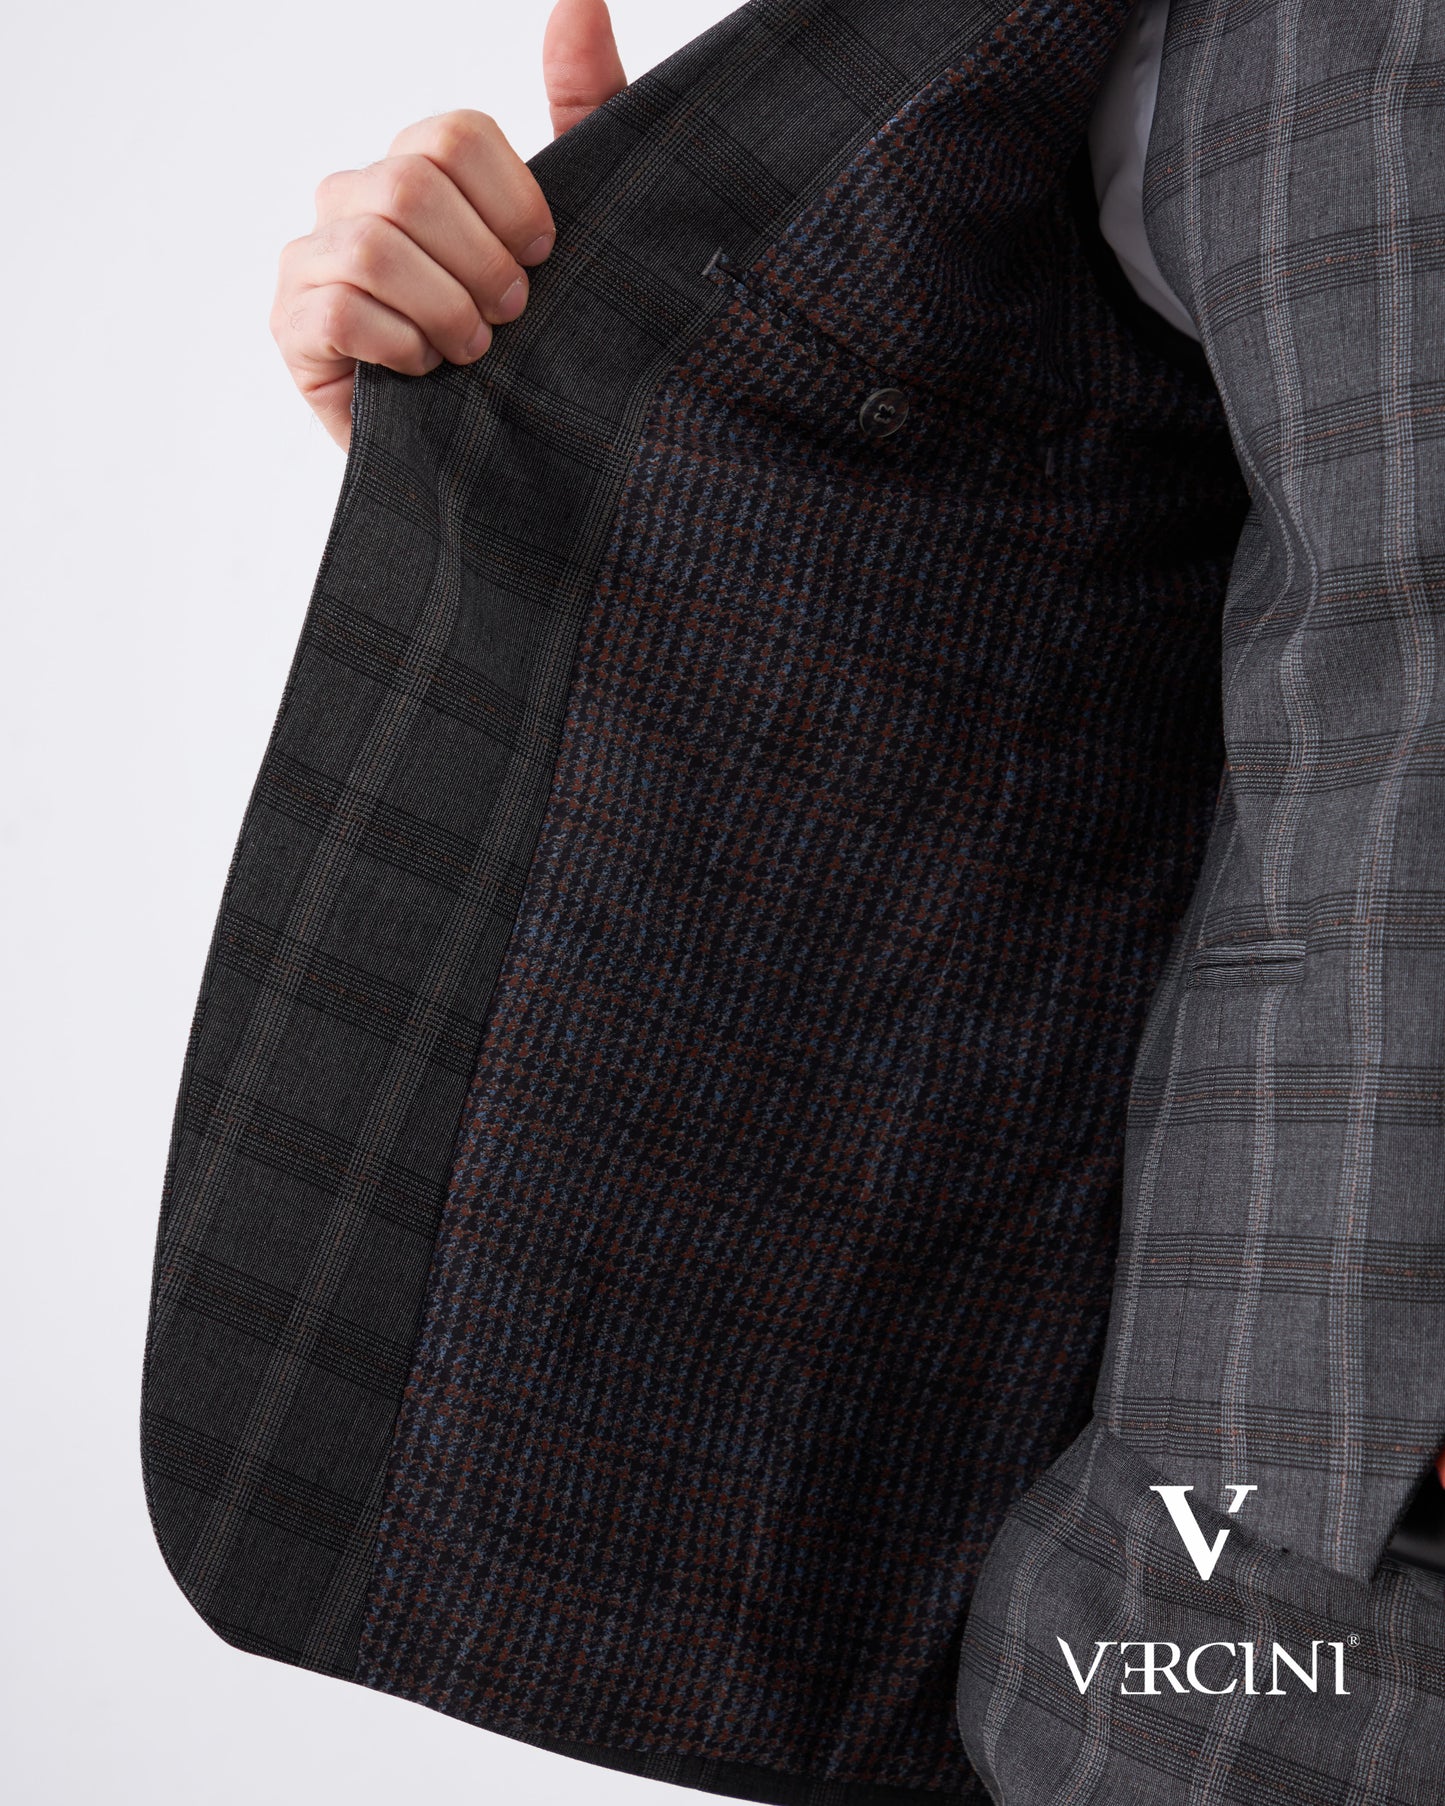 Vercini Charcoal Checkerboard Elegance Three-Piece Men's Suit